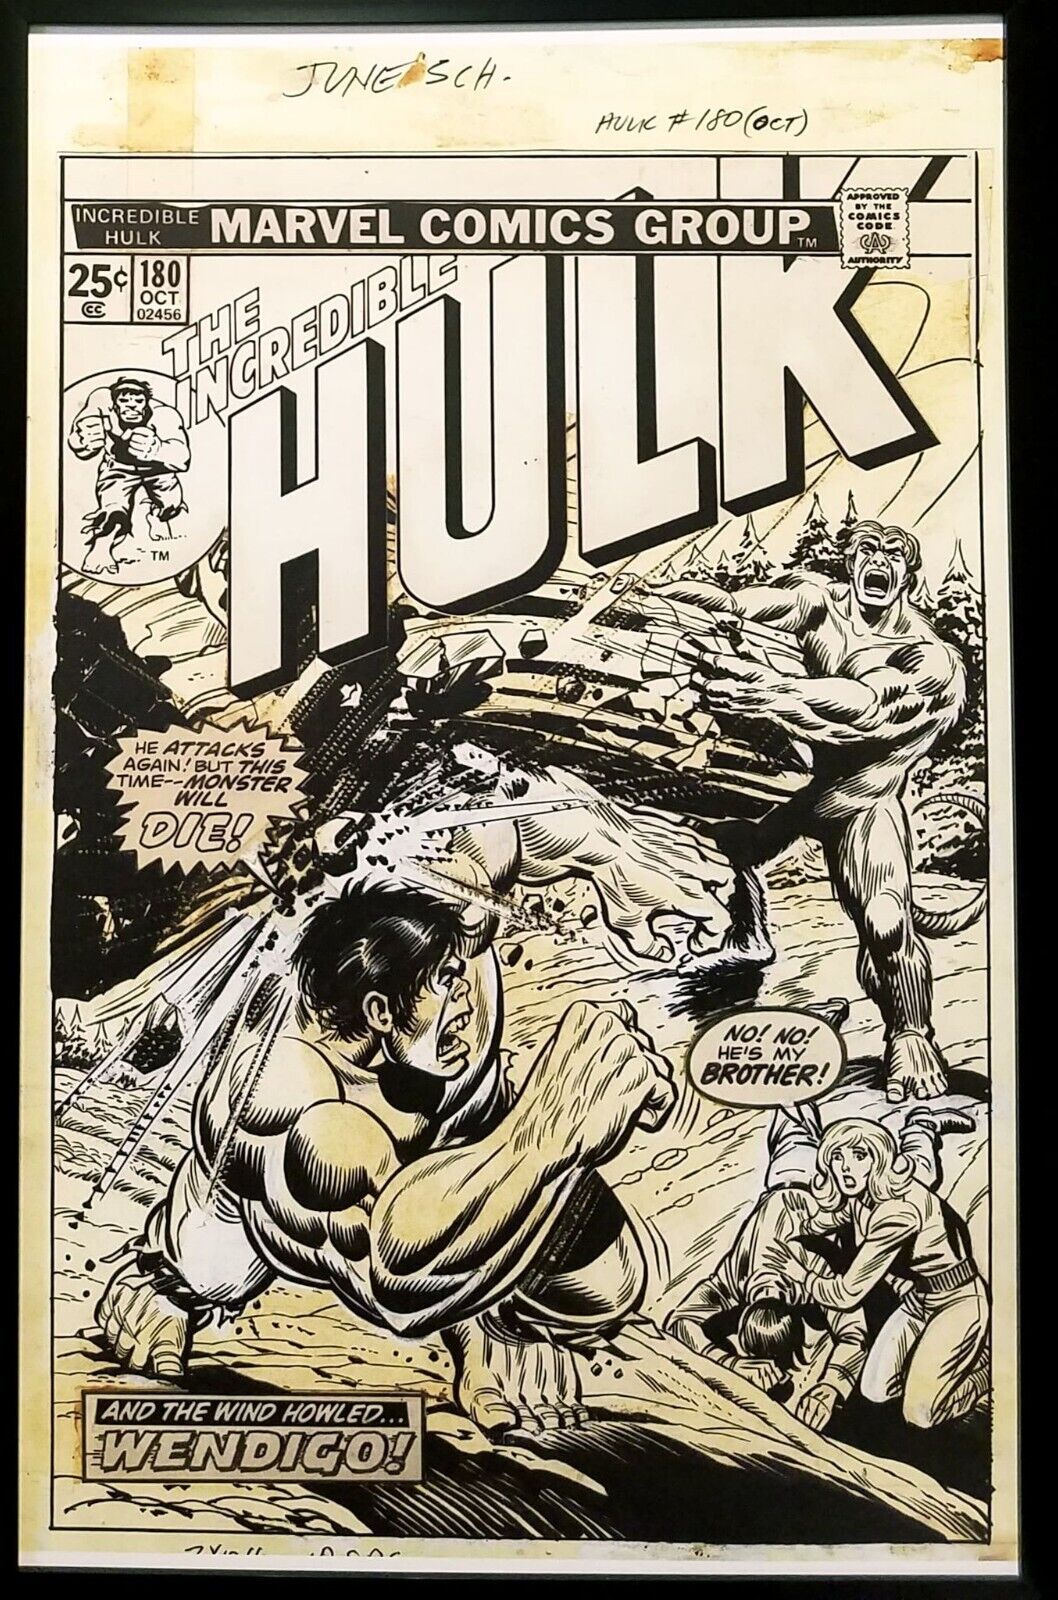 Incredible Hulk #180 Herb Trimpe 11x17 FRAMED Original Art Poster Marvel Comics